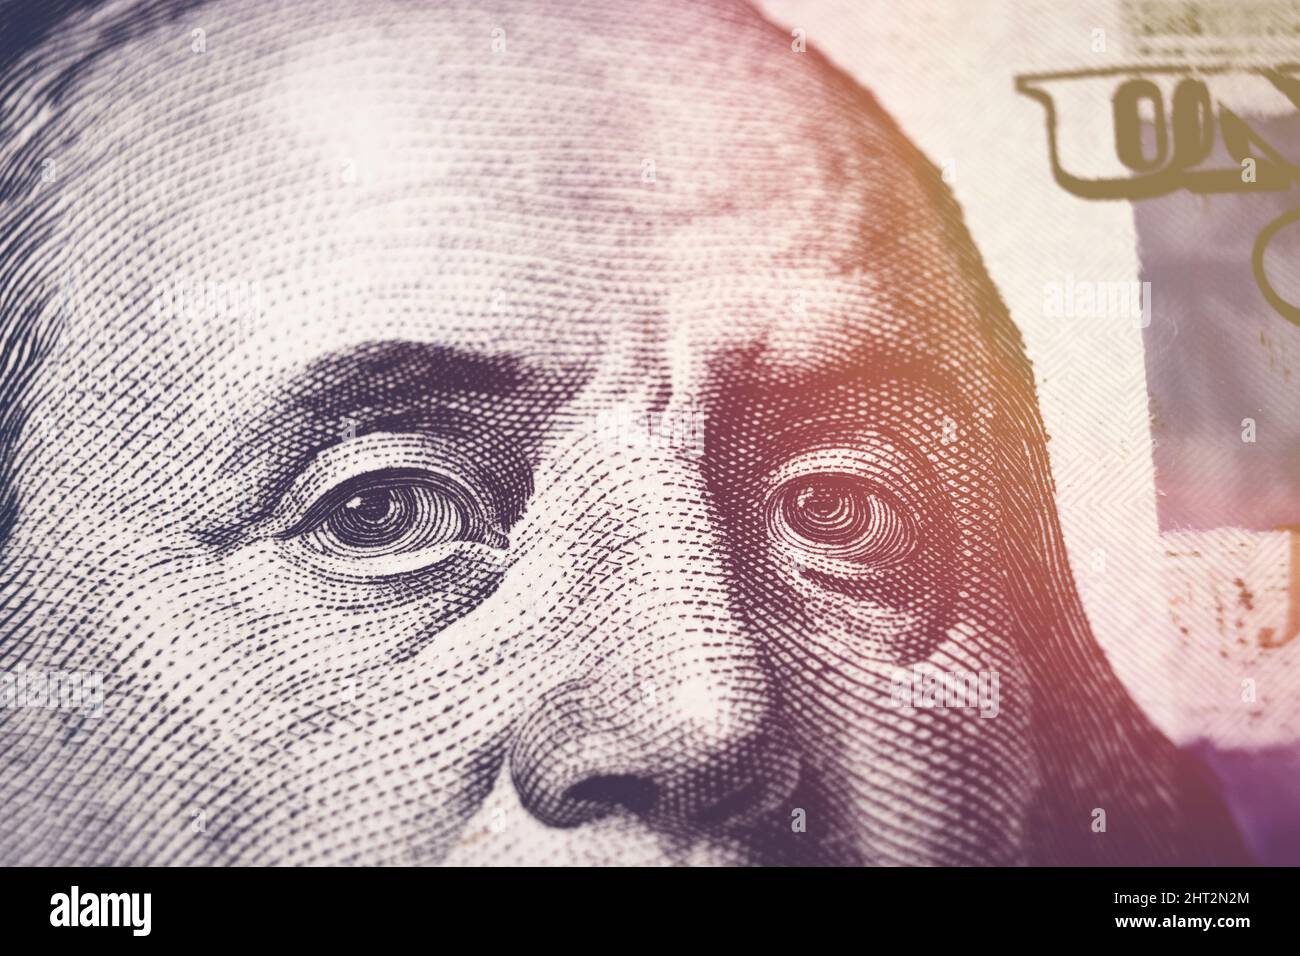 United states hundred dollars money bill, Benjamin Franklin portrait on 100 banknote with sunlight Stock Photo